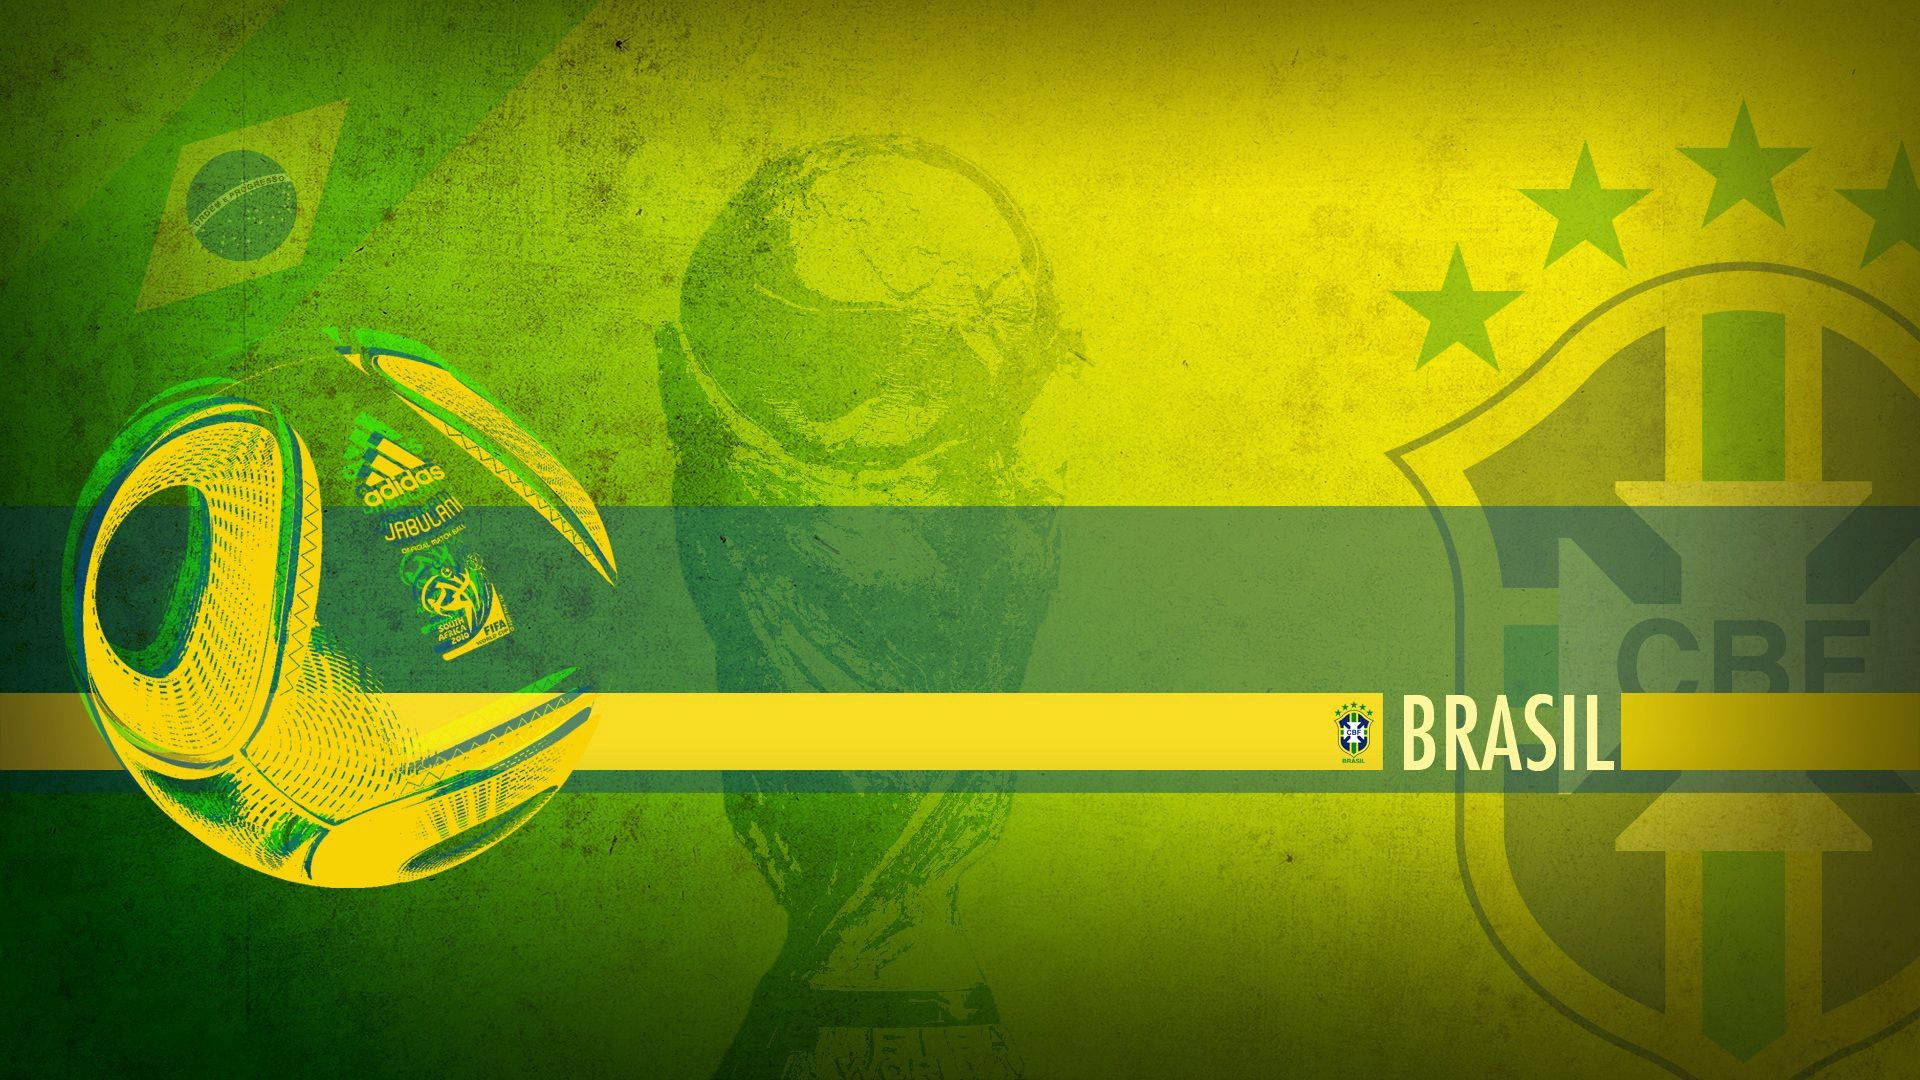 Download Fifa World Cup Brazil Digital Art Wallpaper 